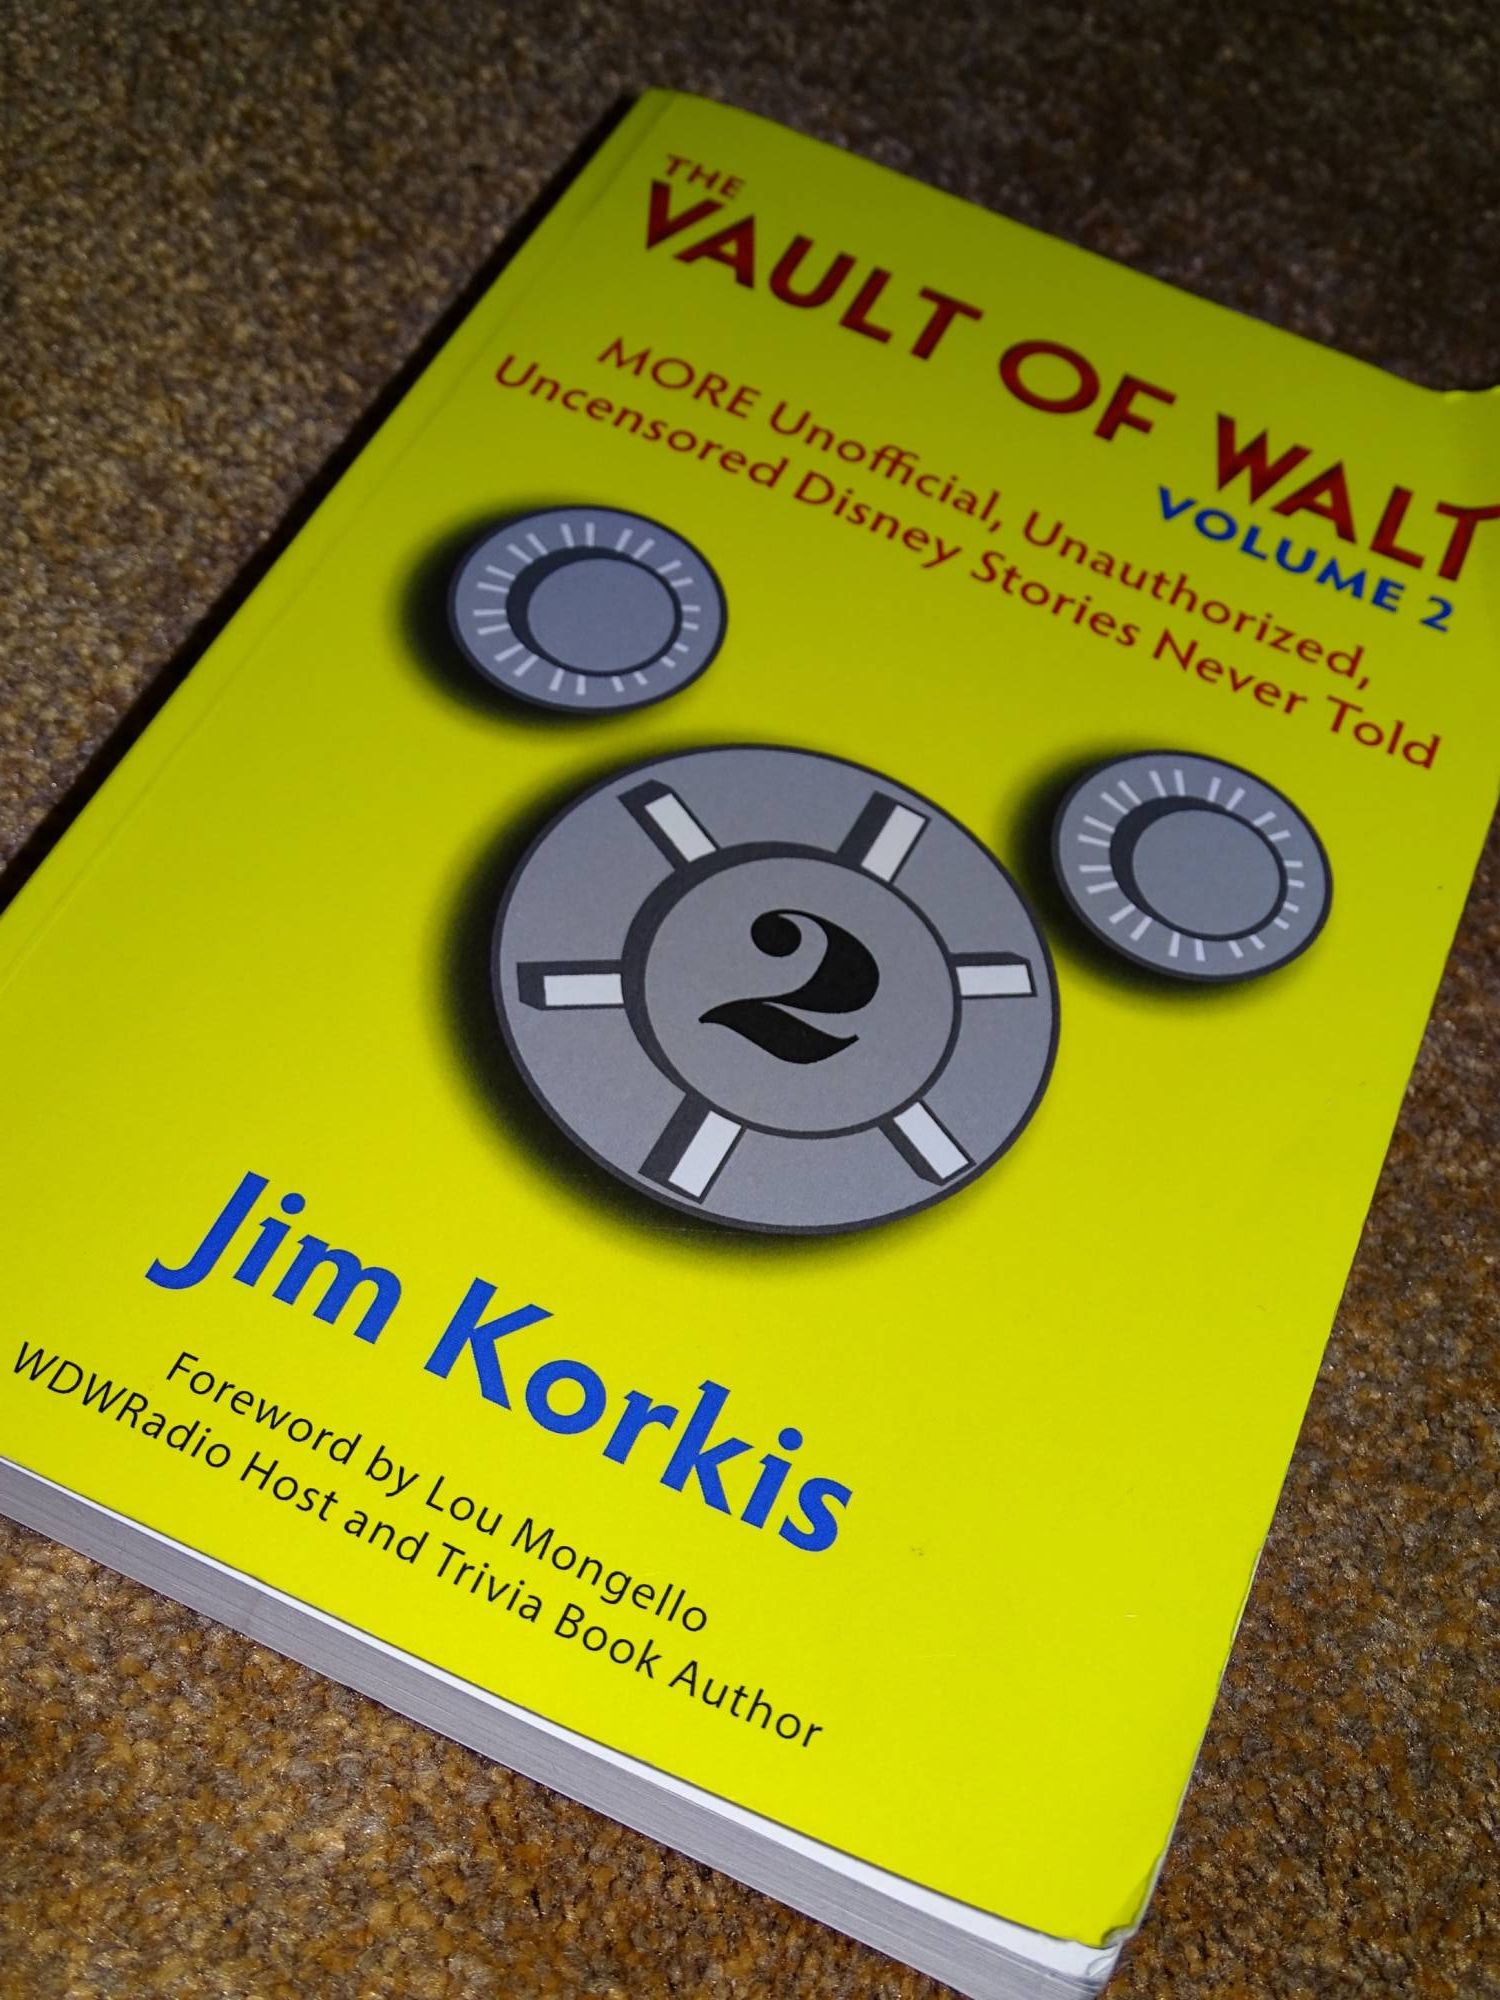 Vault of Walt volume 2 by Jim Korkis